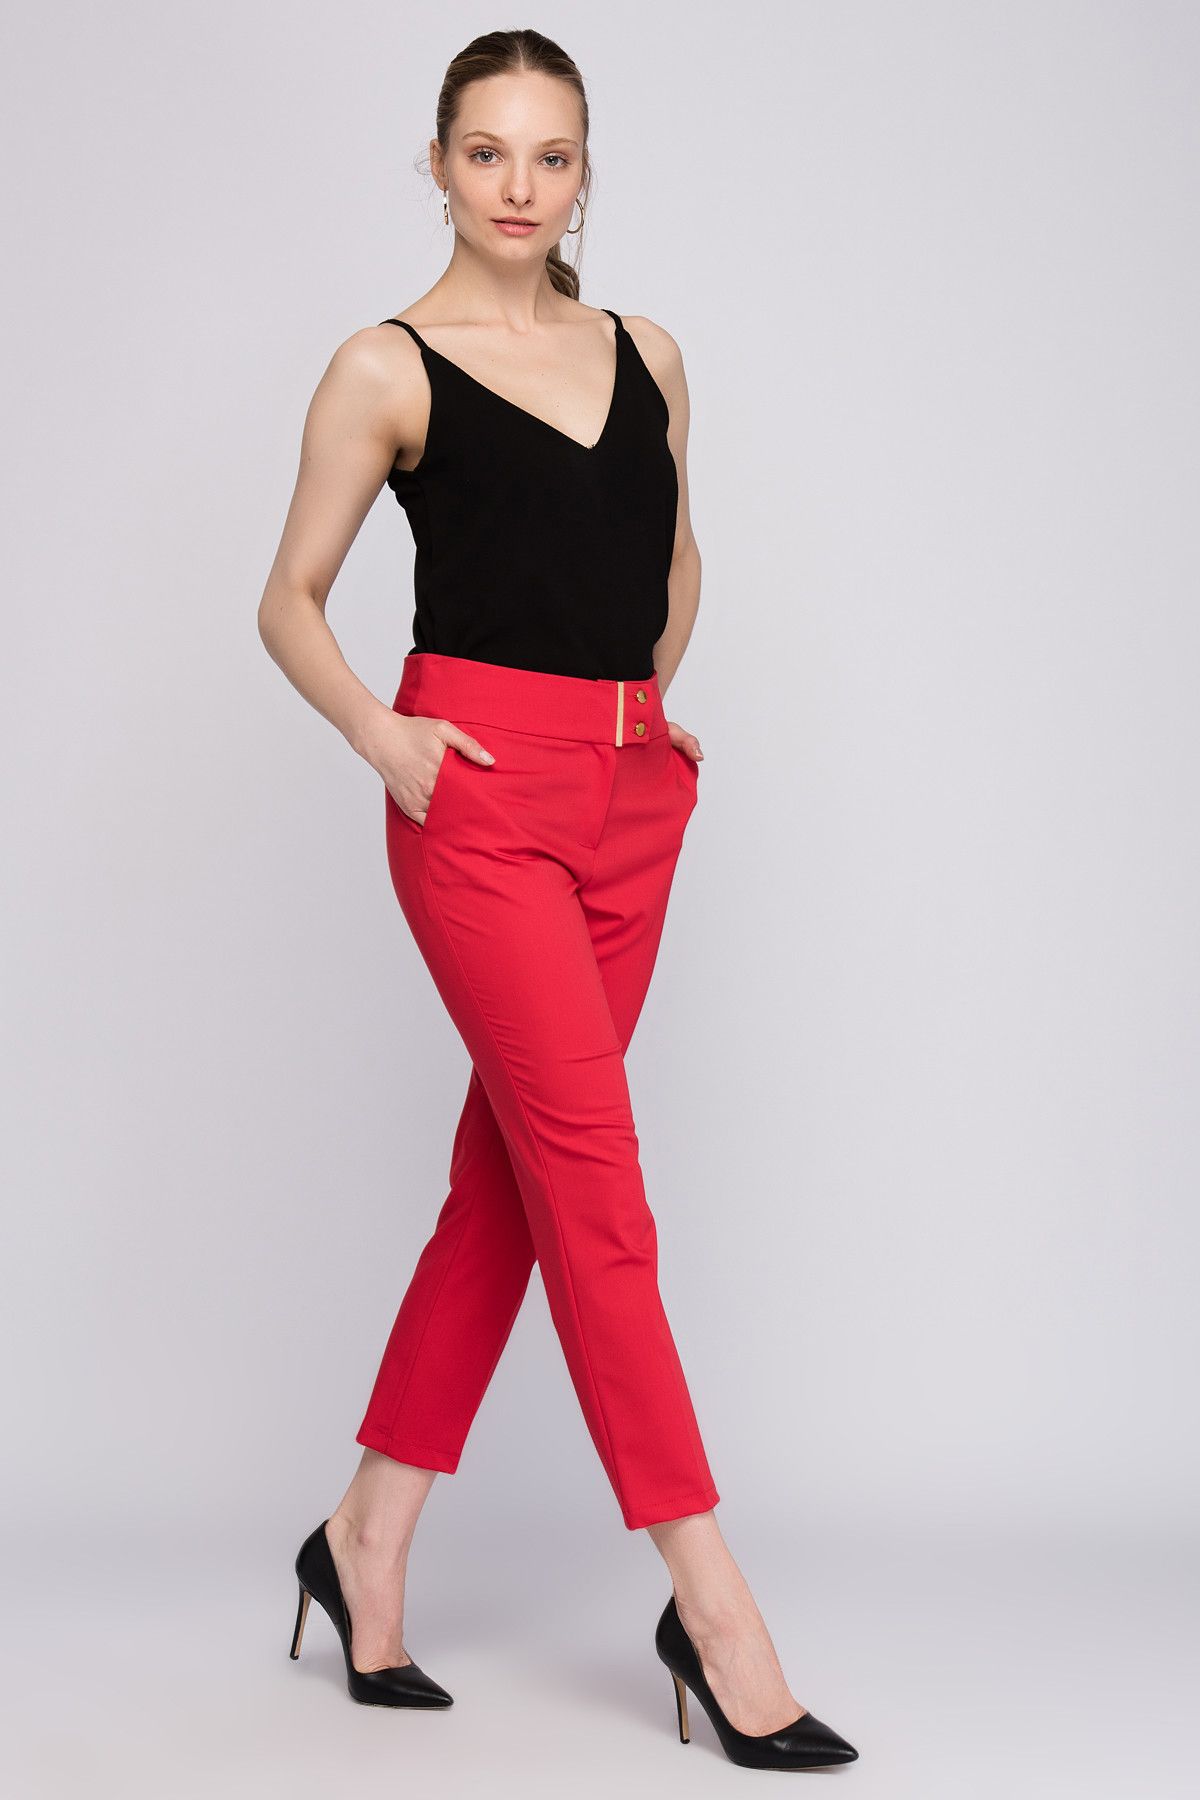 Yare Kadın Kırmızı Metal Tokalı Boru Paça Pantolon Y-3202-YARET